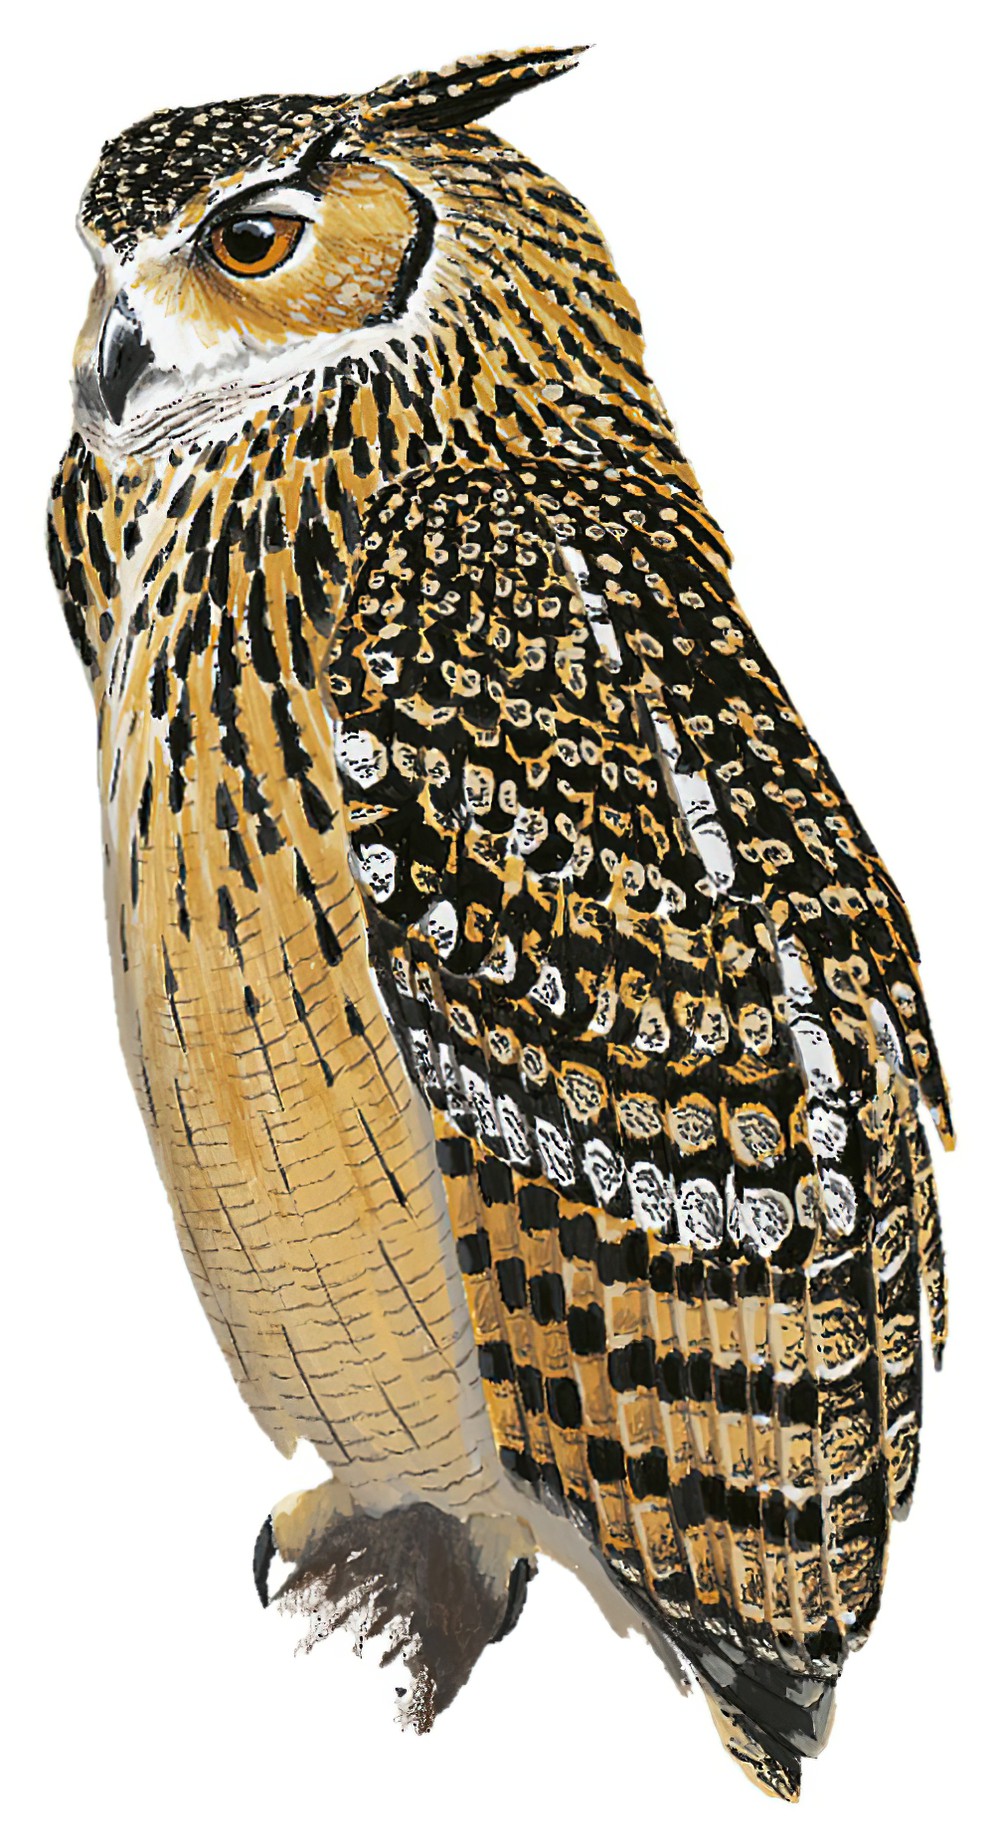 Rock Eagle-Owl / Bubo bengalensis